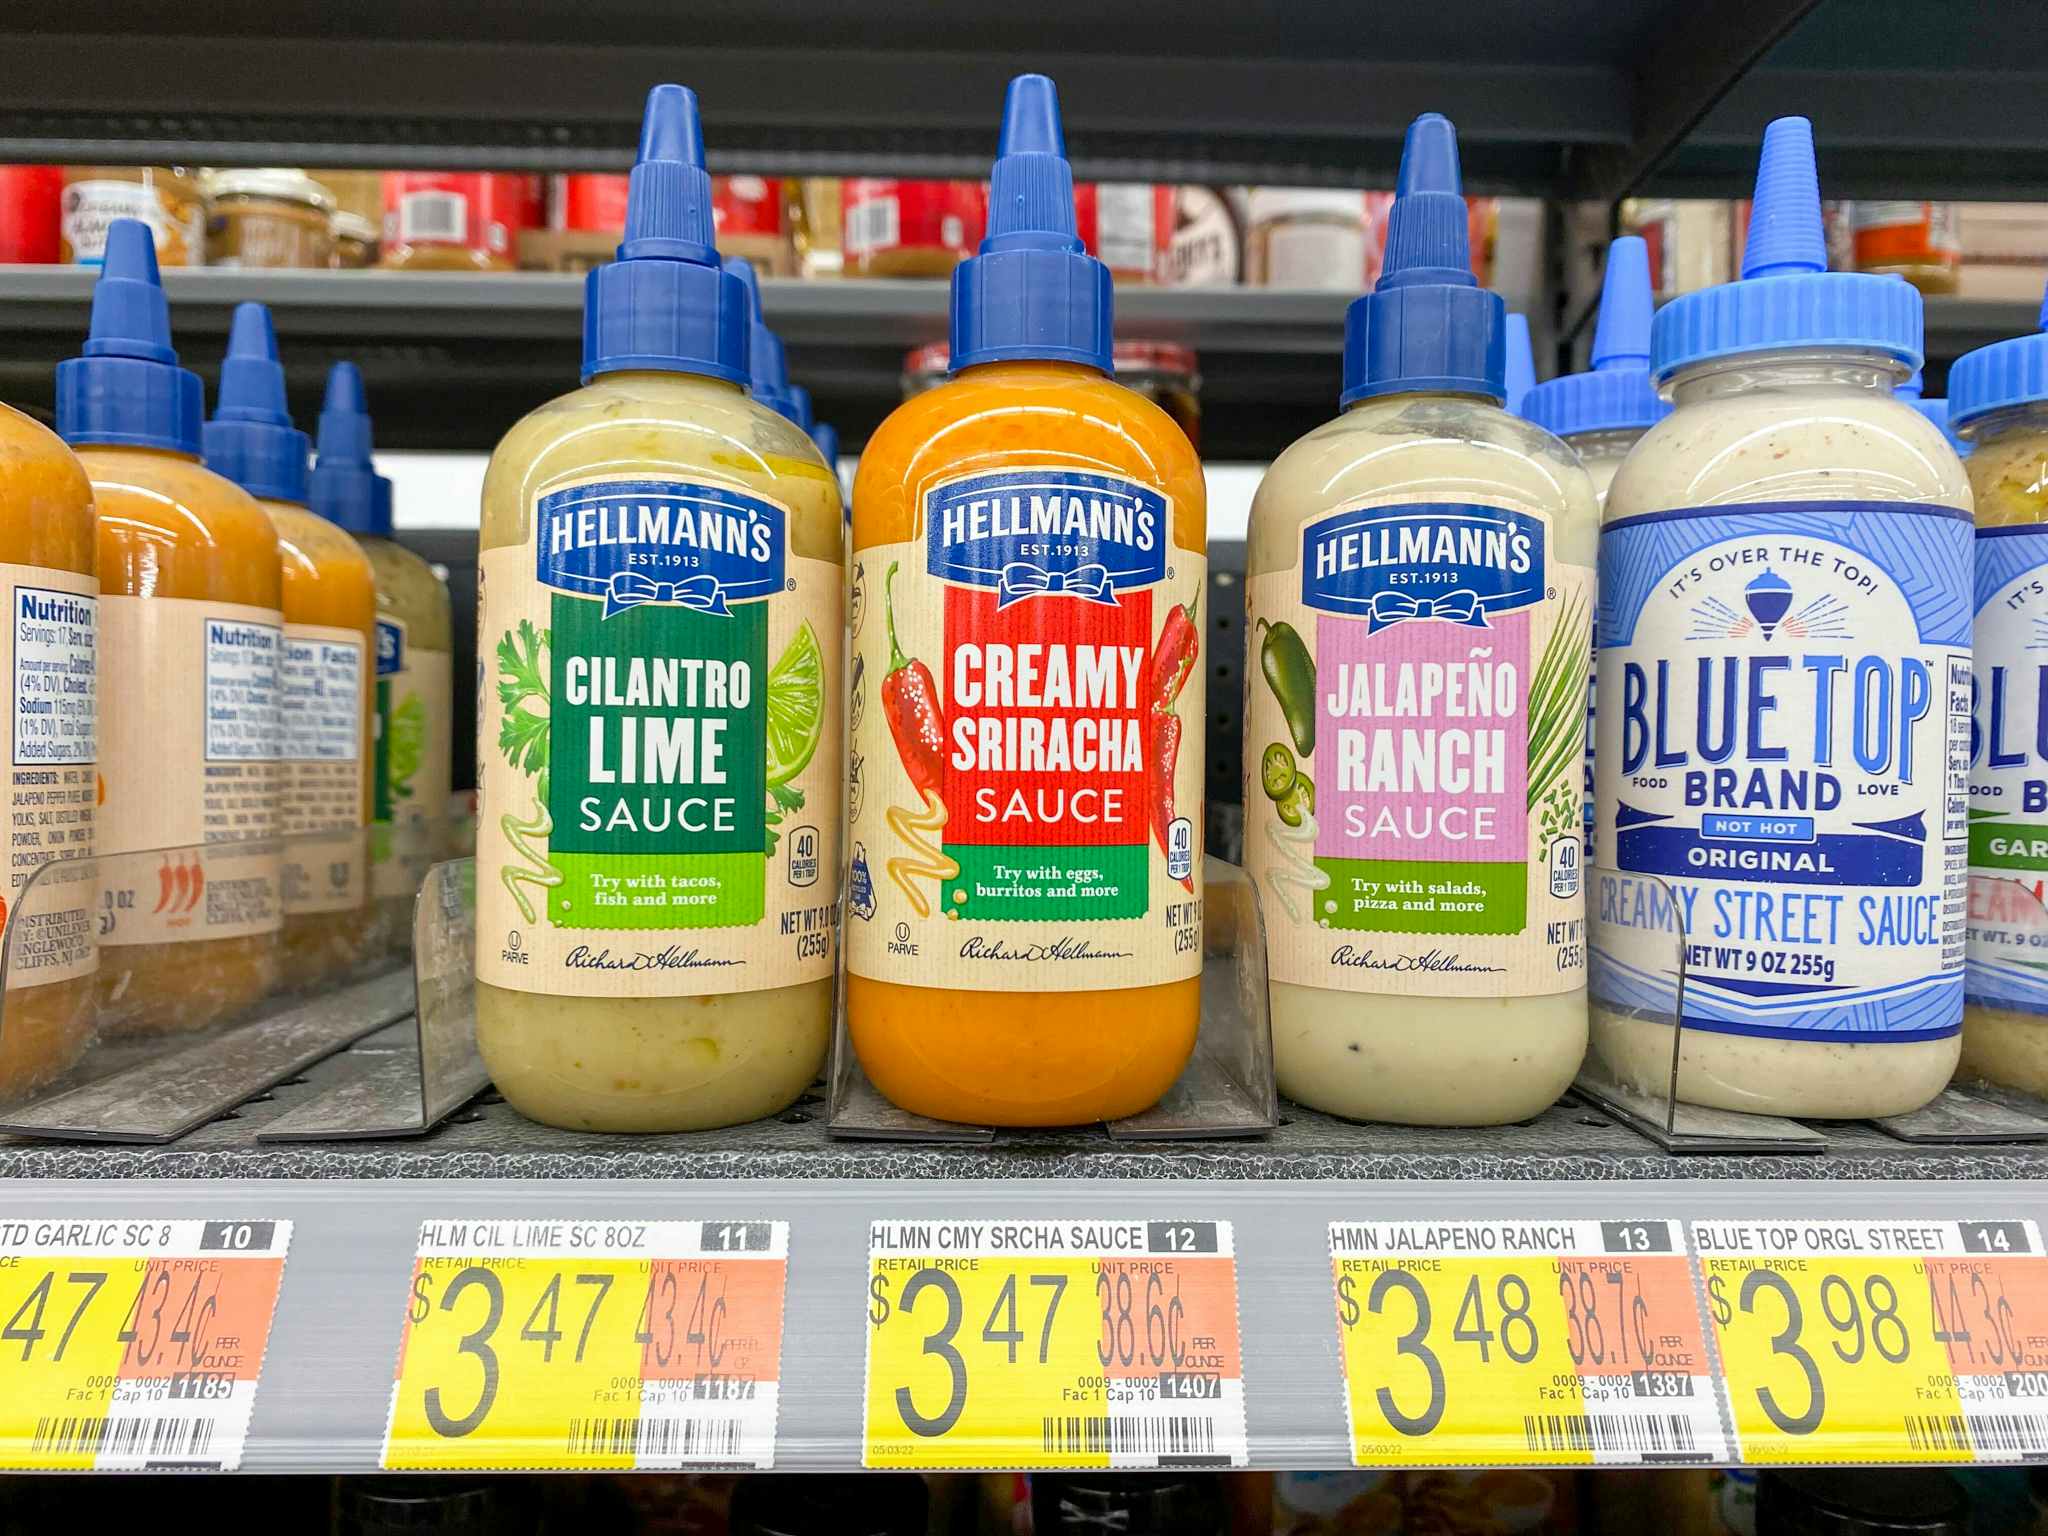 Hellmann's Sauce products on display at Walmart